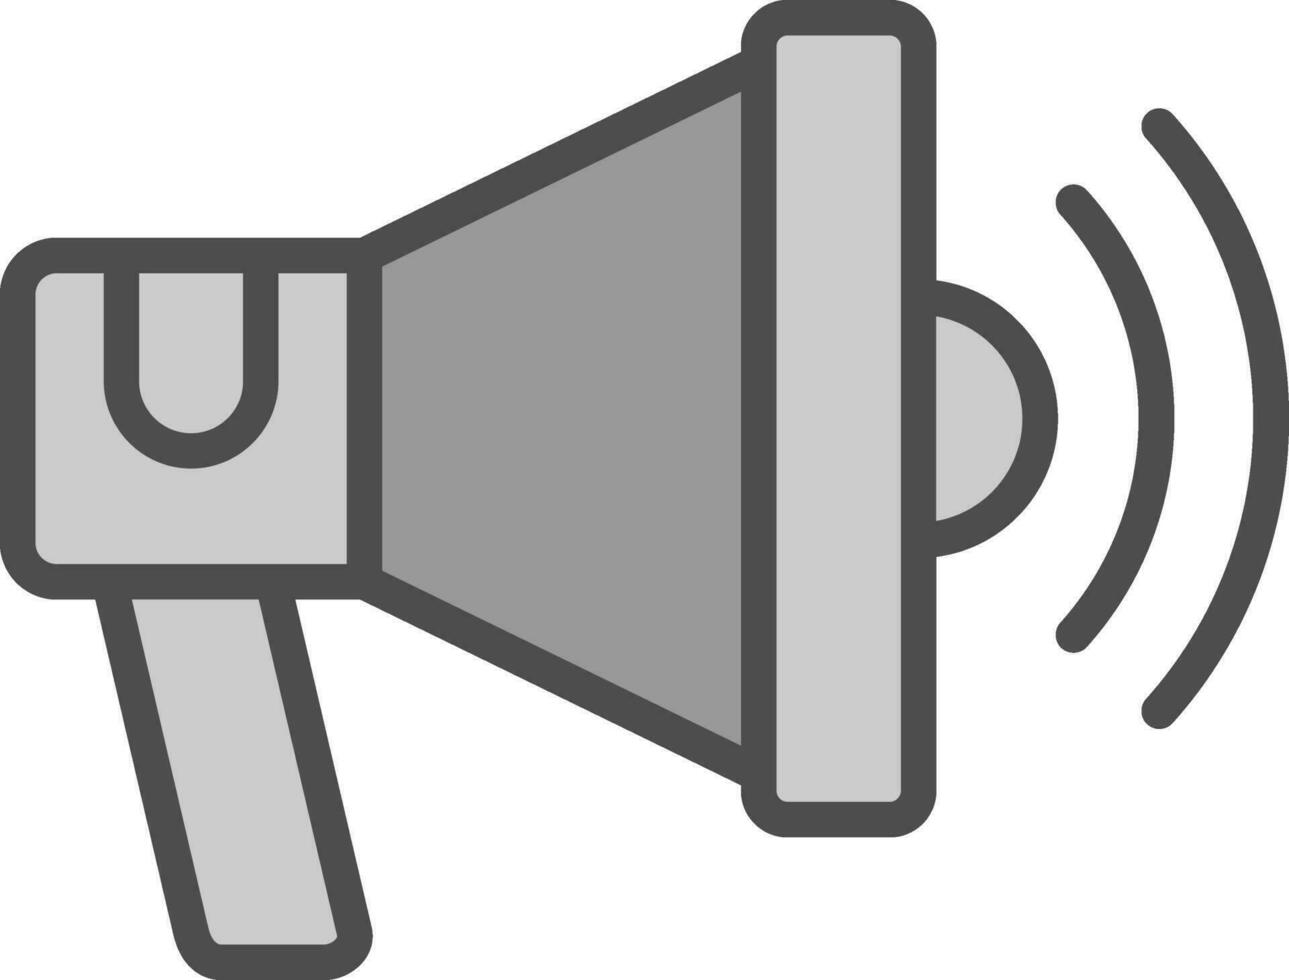 megafon vektor ikon design